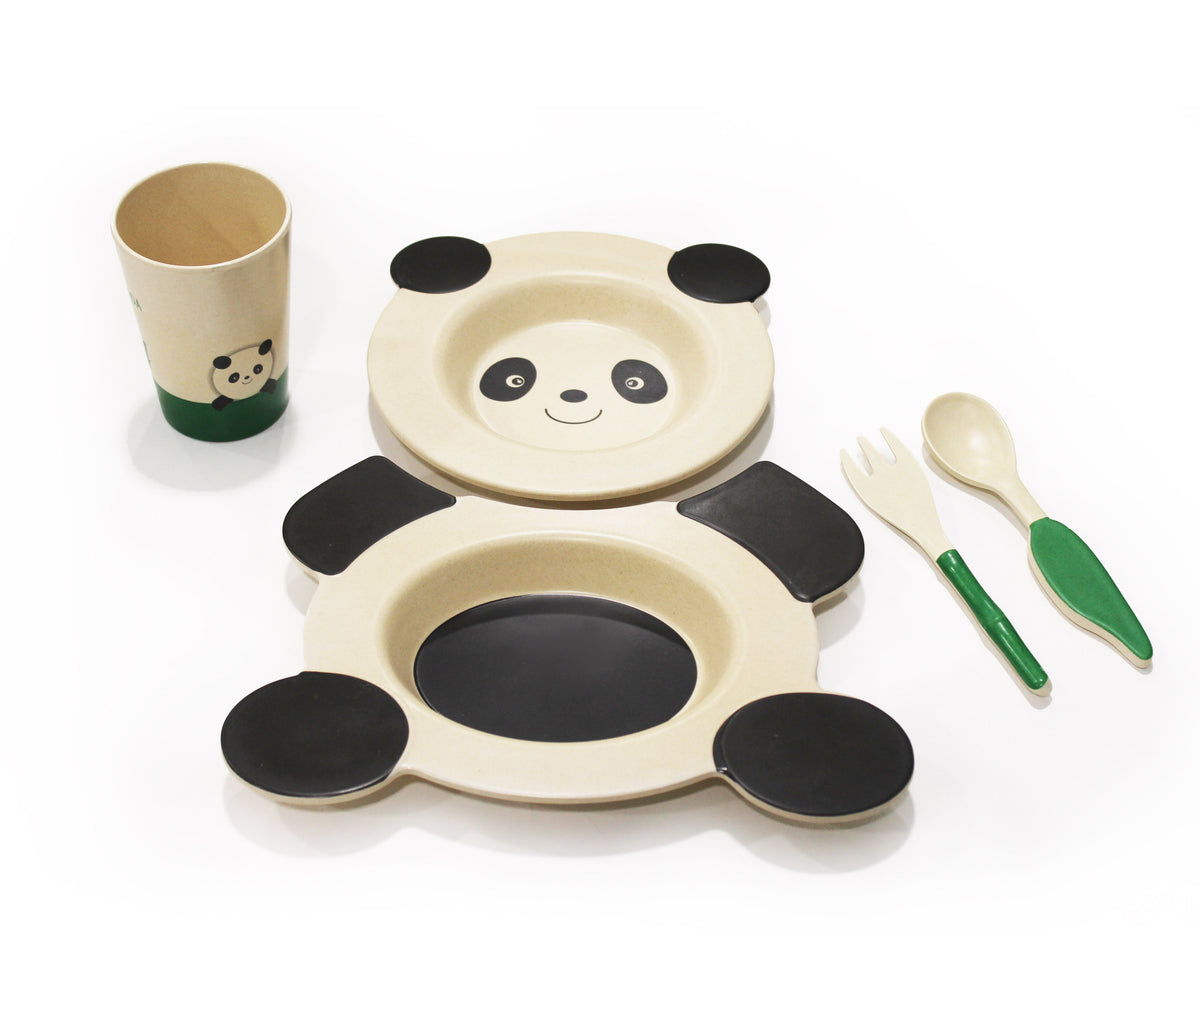 Dinnerware Tableware Bowl Spoon Set Panda Design Baby Feeding Bowl Wheat  Straw